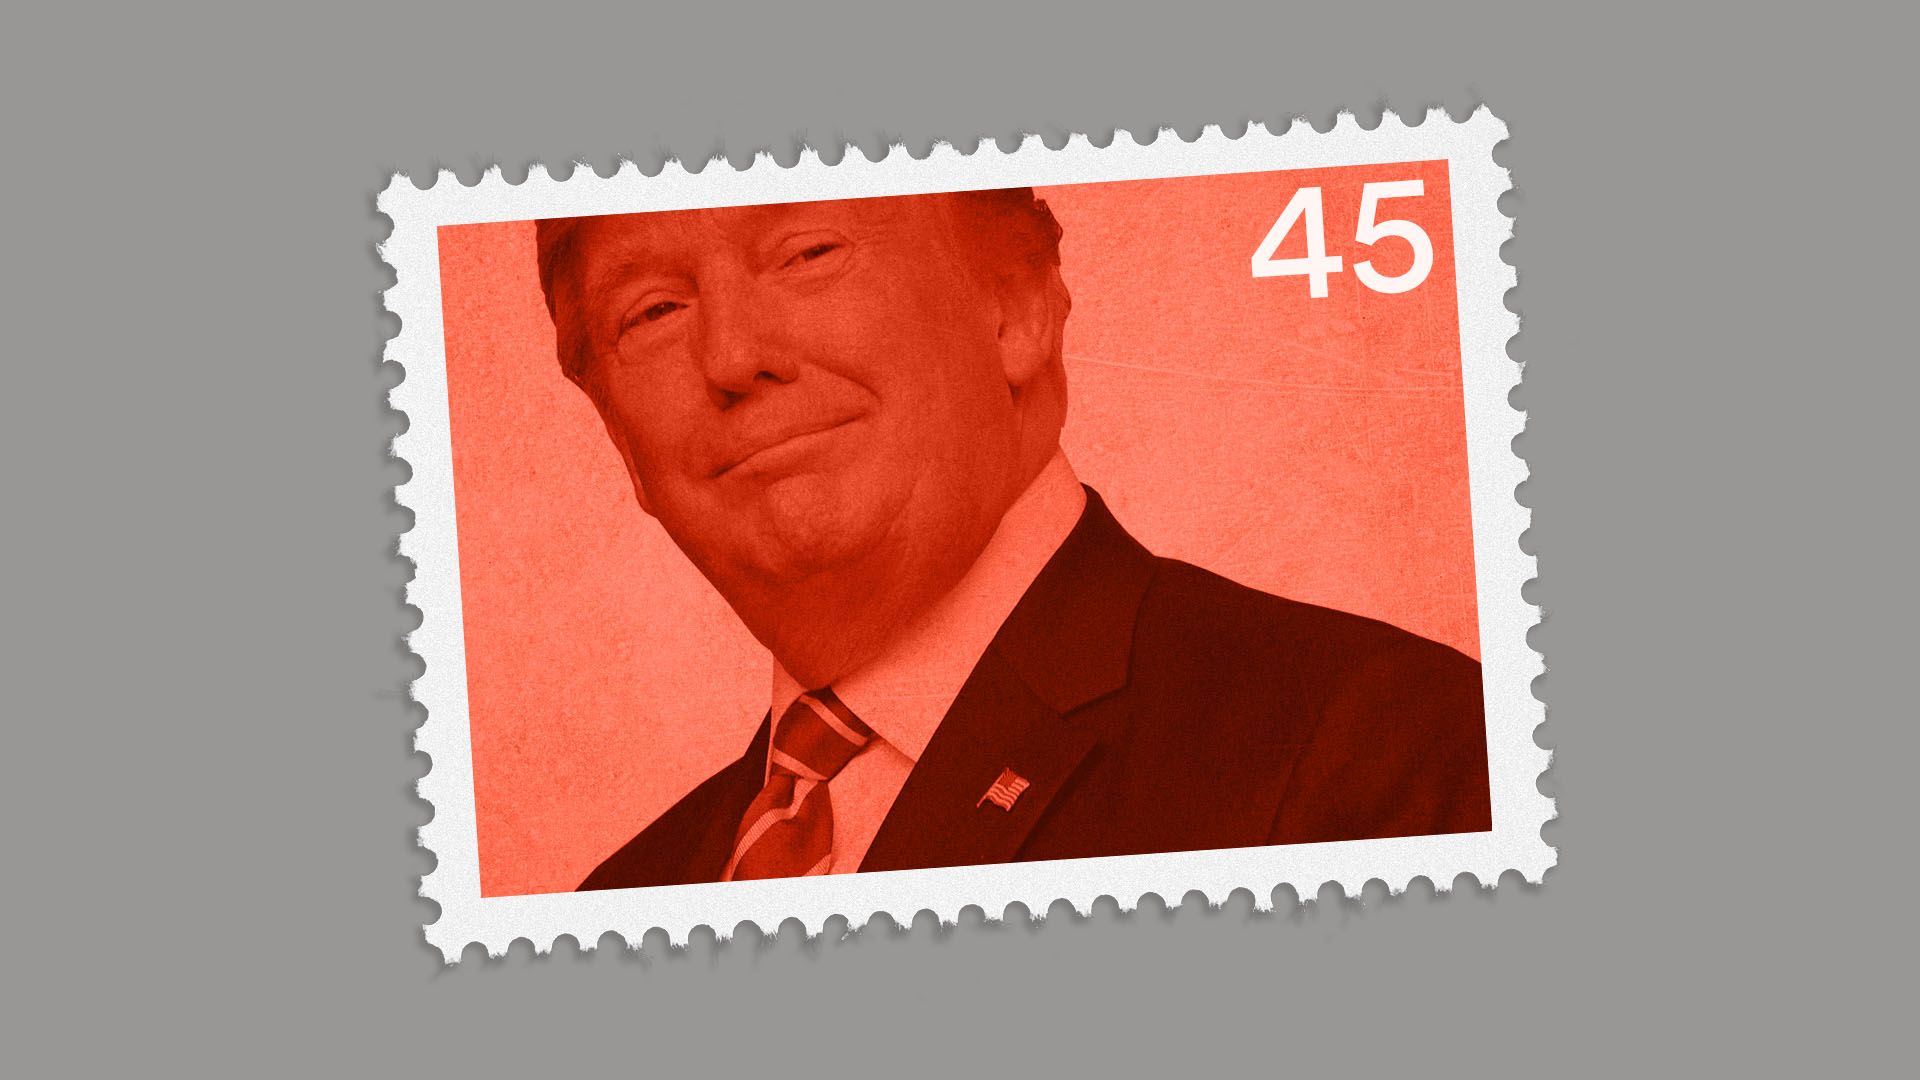 Illustration of a President Trump stamp 